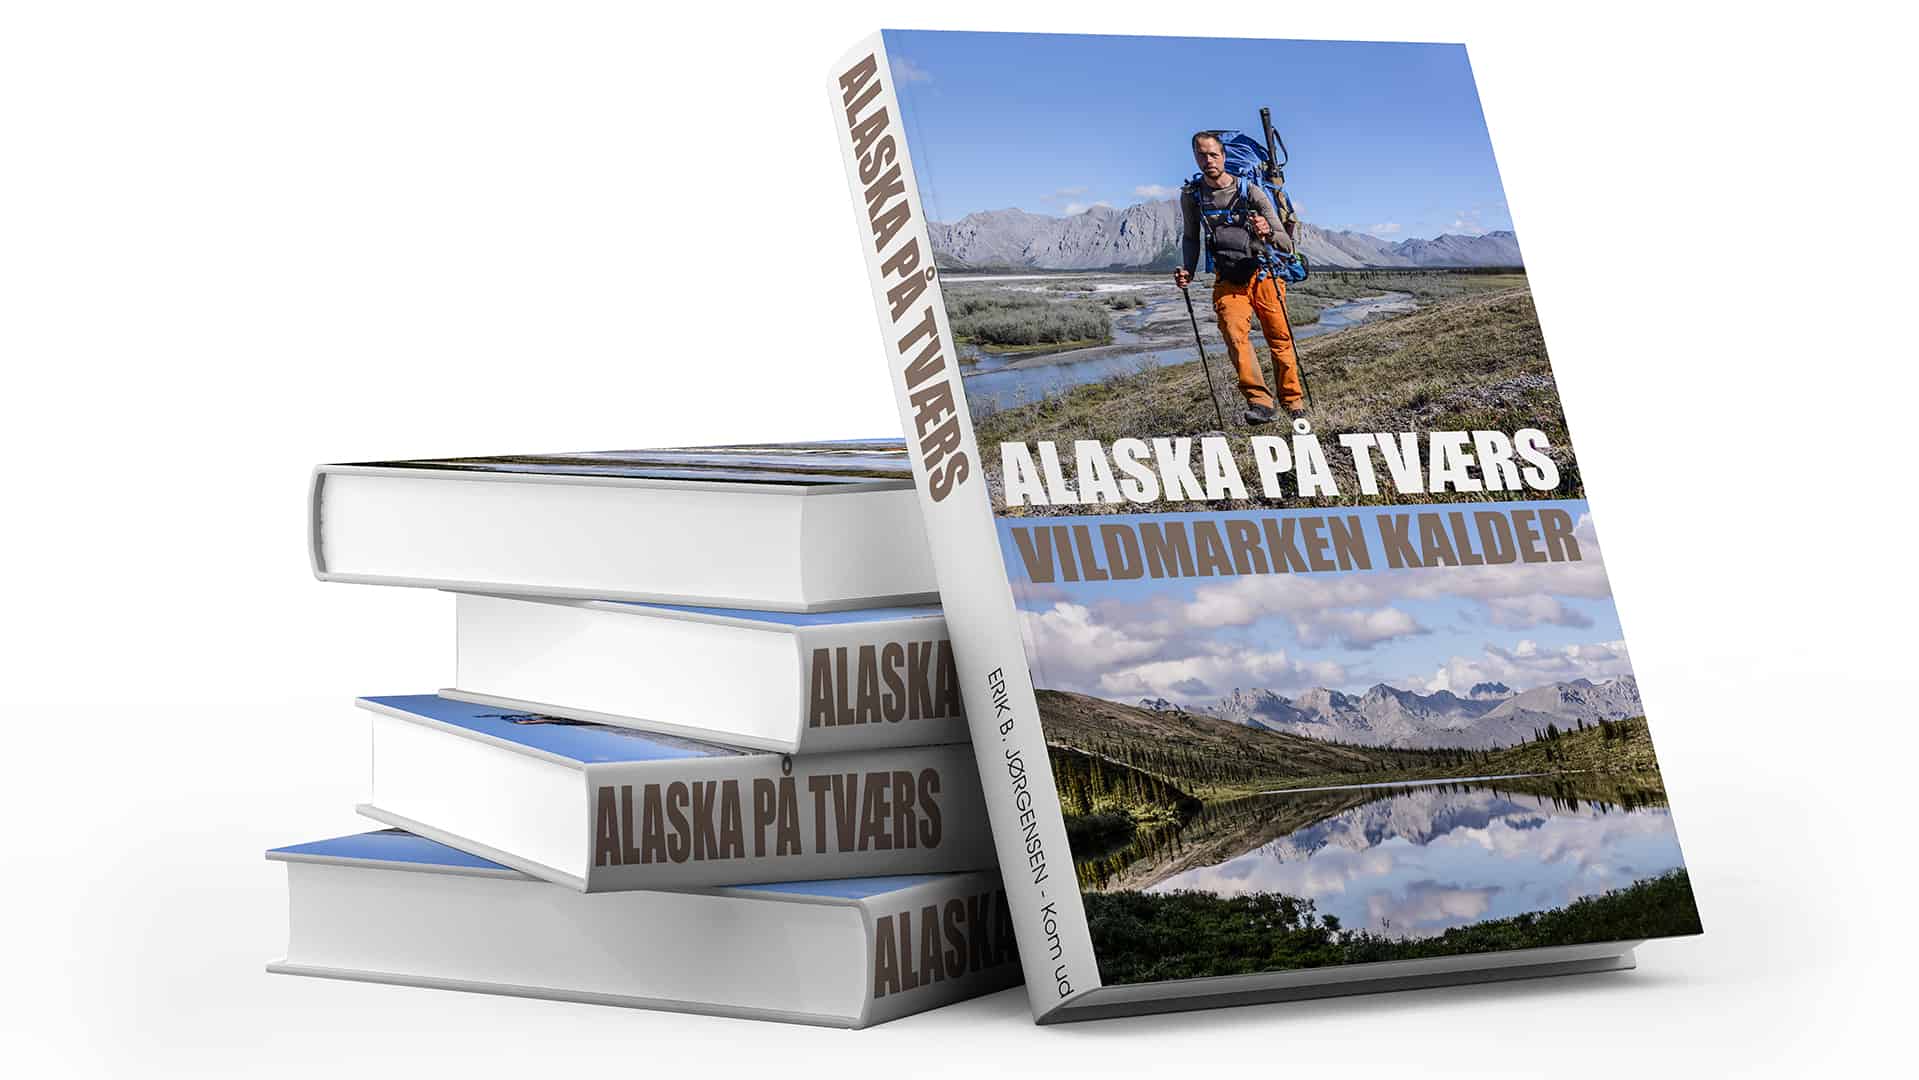 Alaska på tværs, foredrag, Erik B. Jørgensen, bog Alaska på tværs Vildmarken kalder